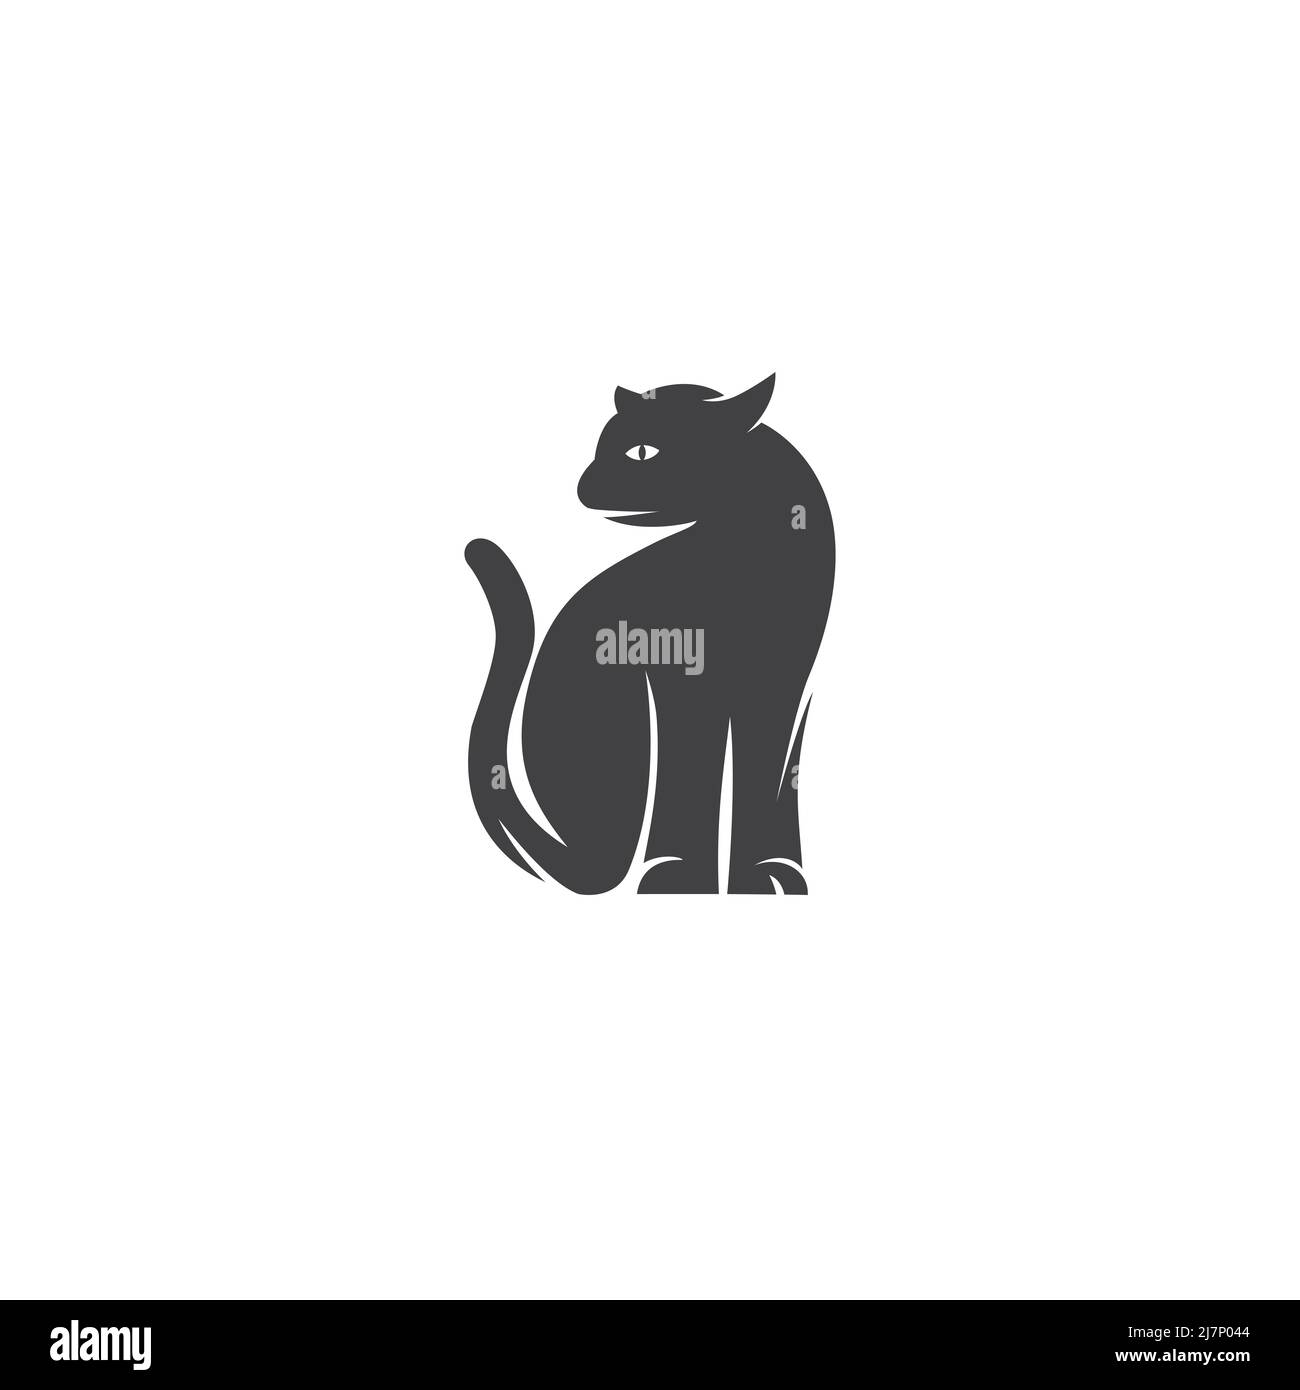 Cat silhouette illustration, on white background Stock Photo